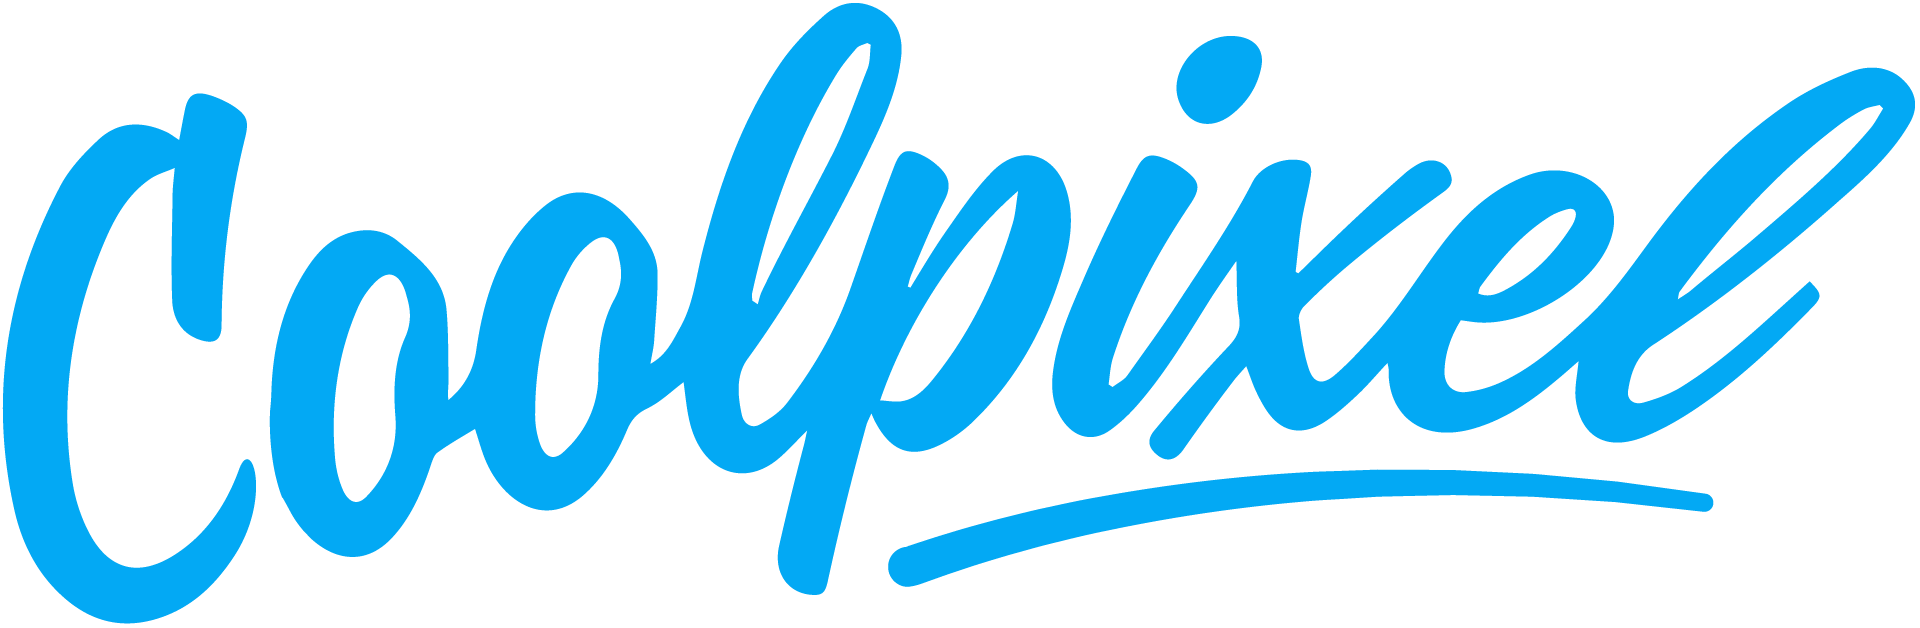 Logo Coolpixel